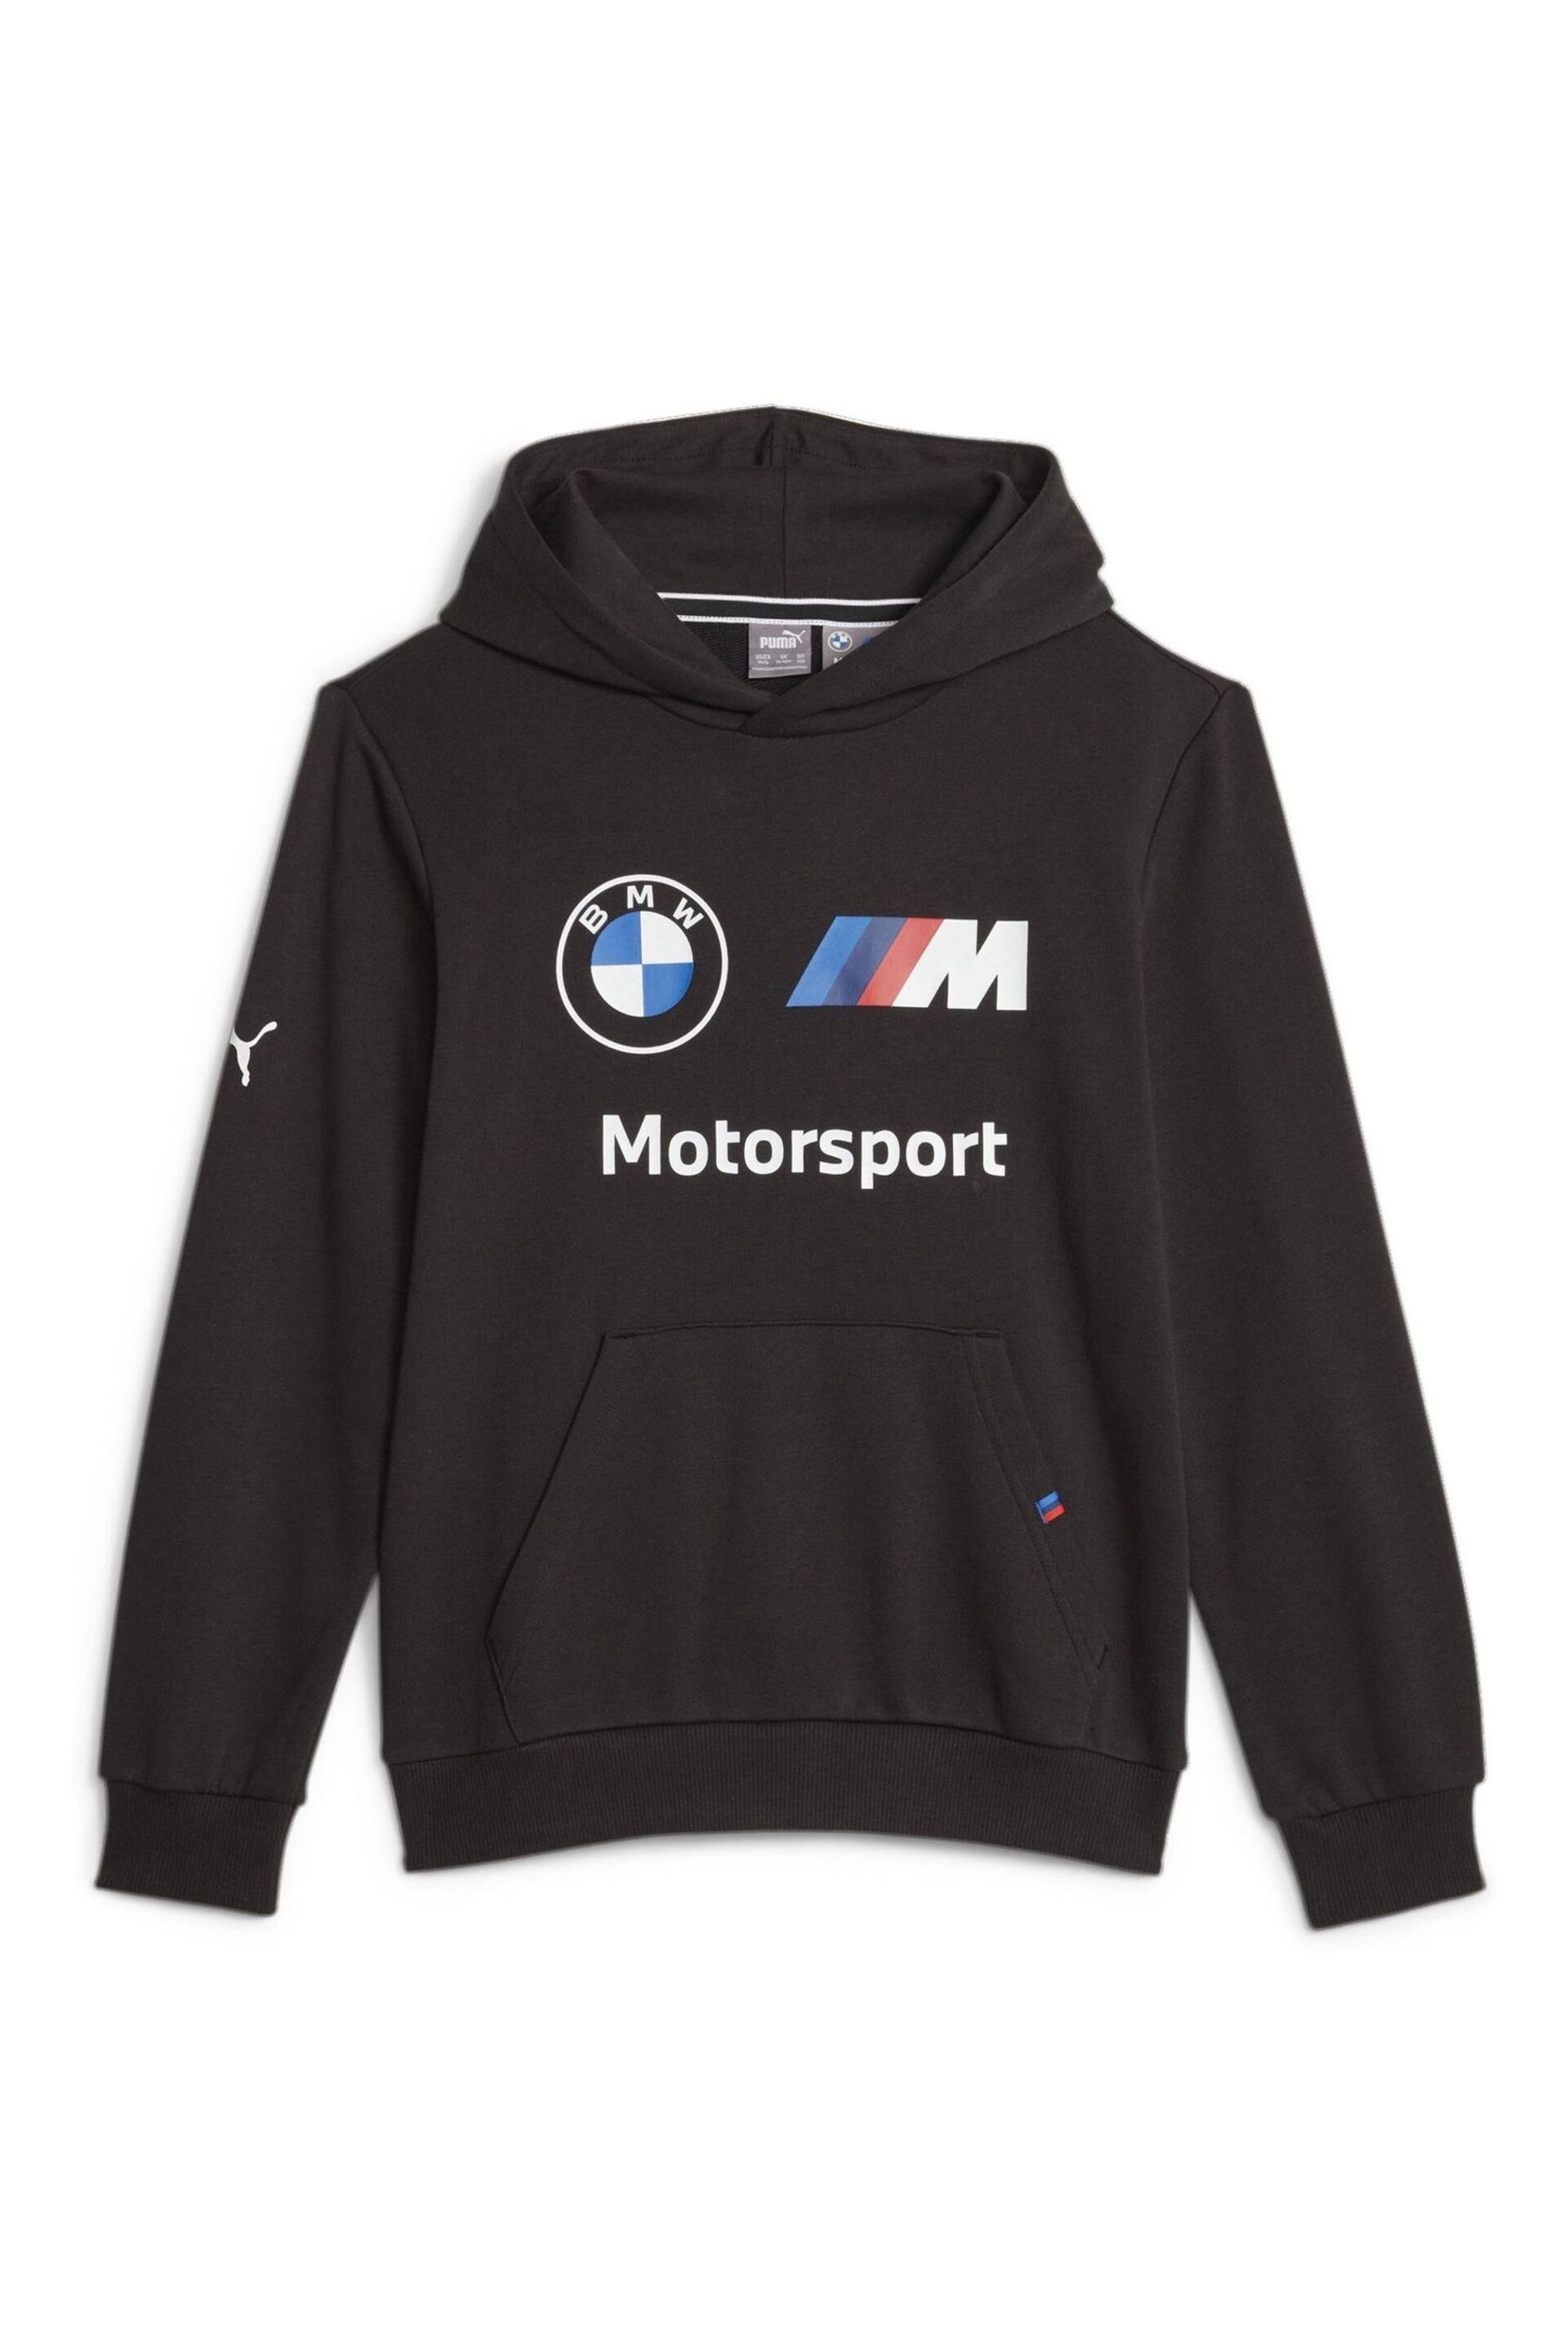 Puma Black BMW M Motorsport Youth Essentials Hoodie - Image 1 of 2